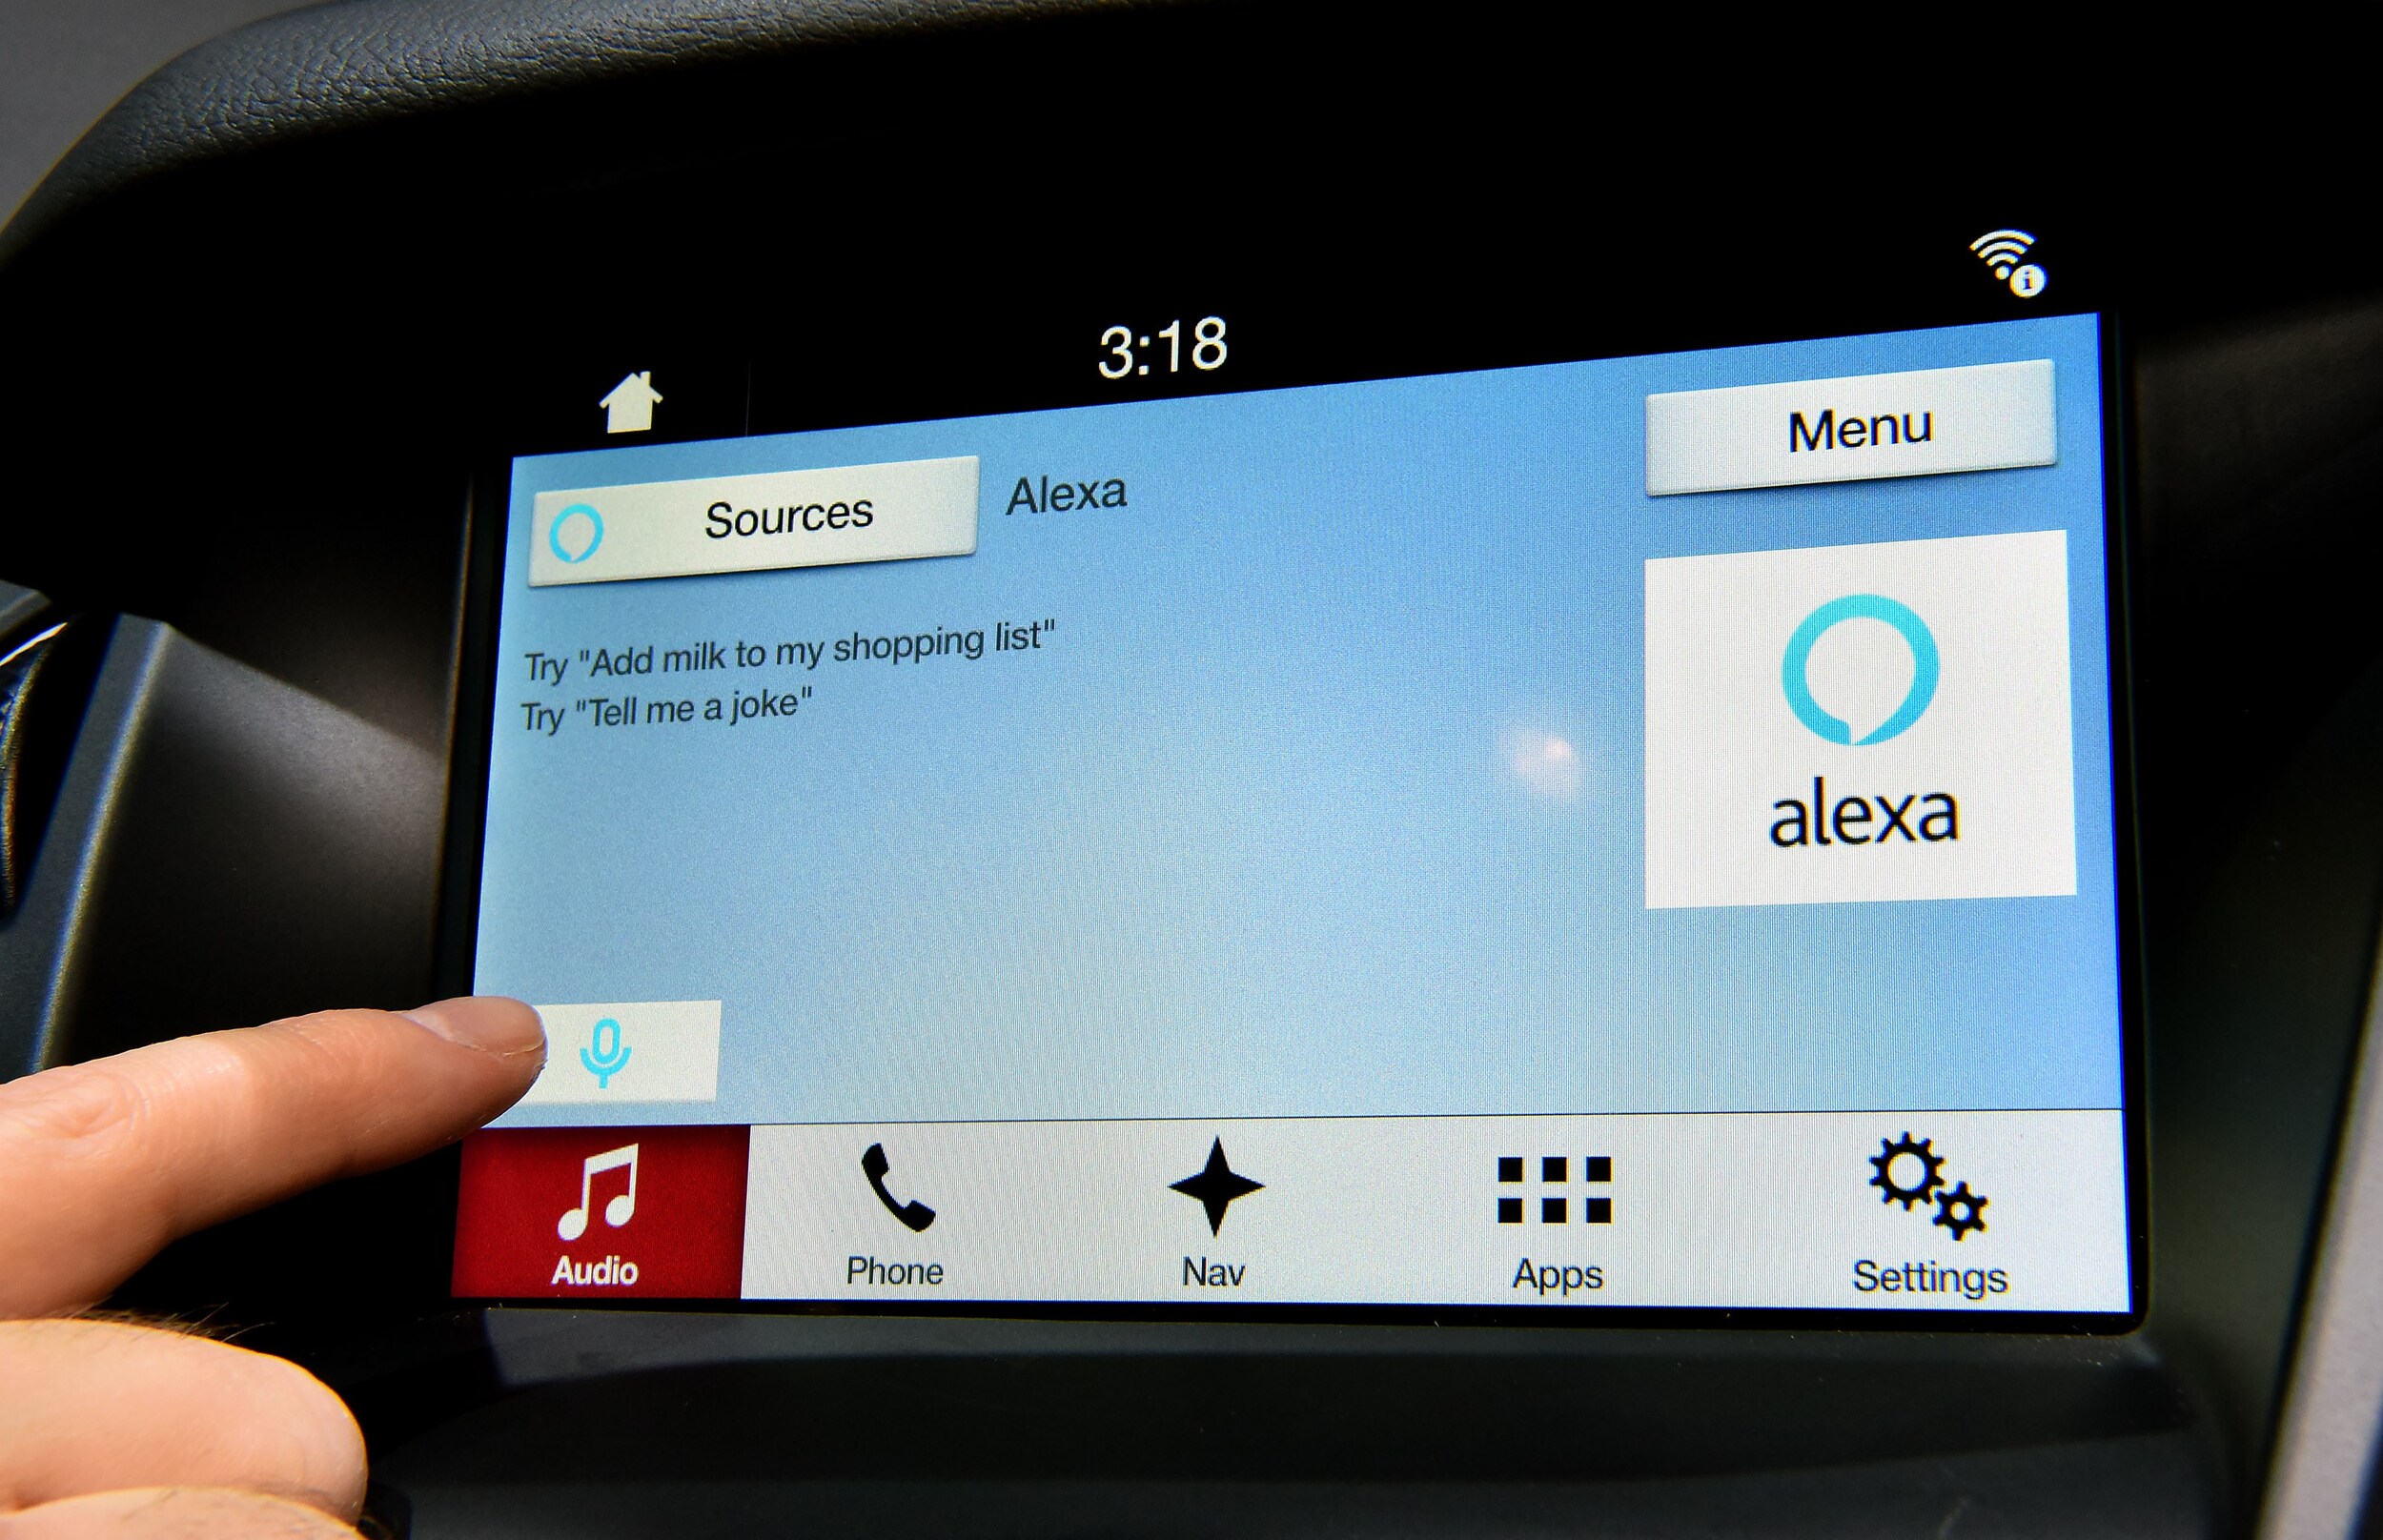 Alexa Auto: everything you need to know